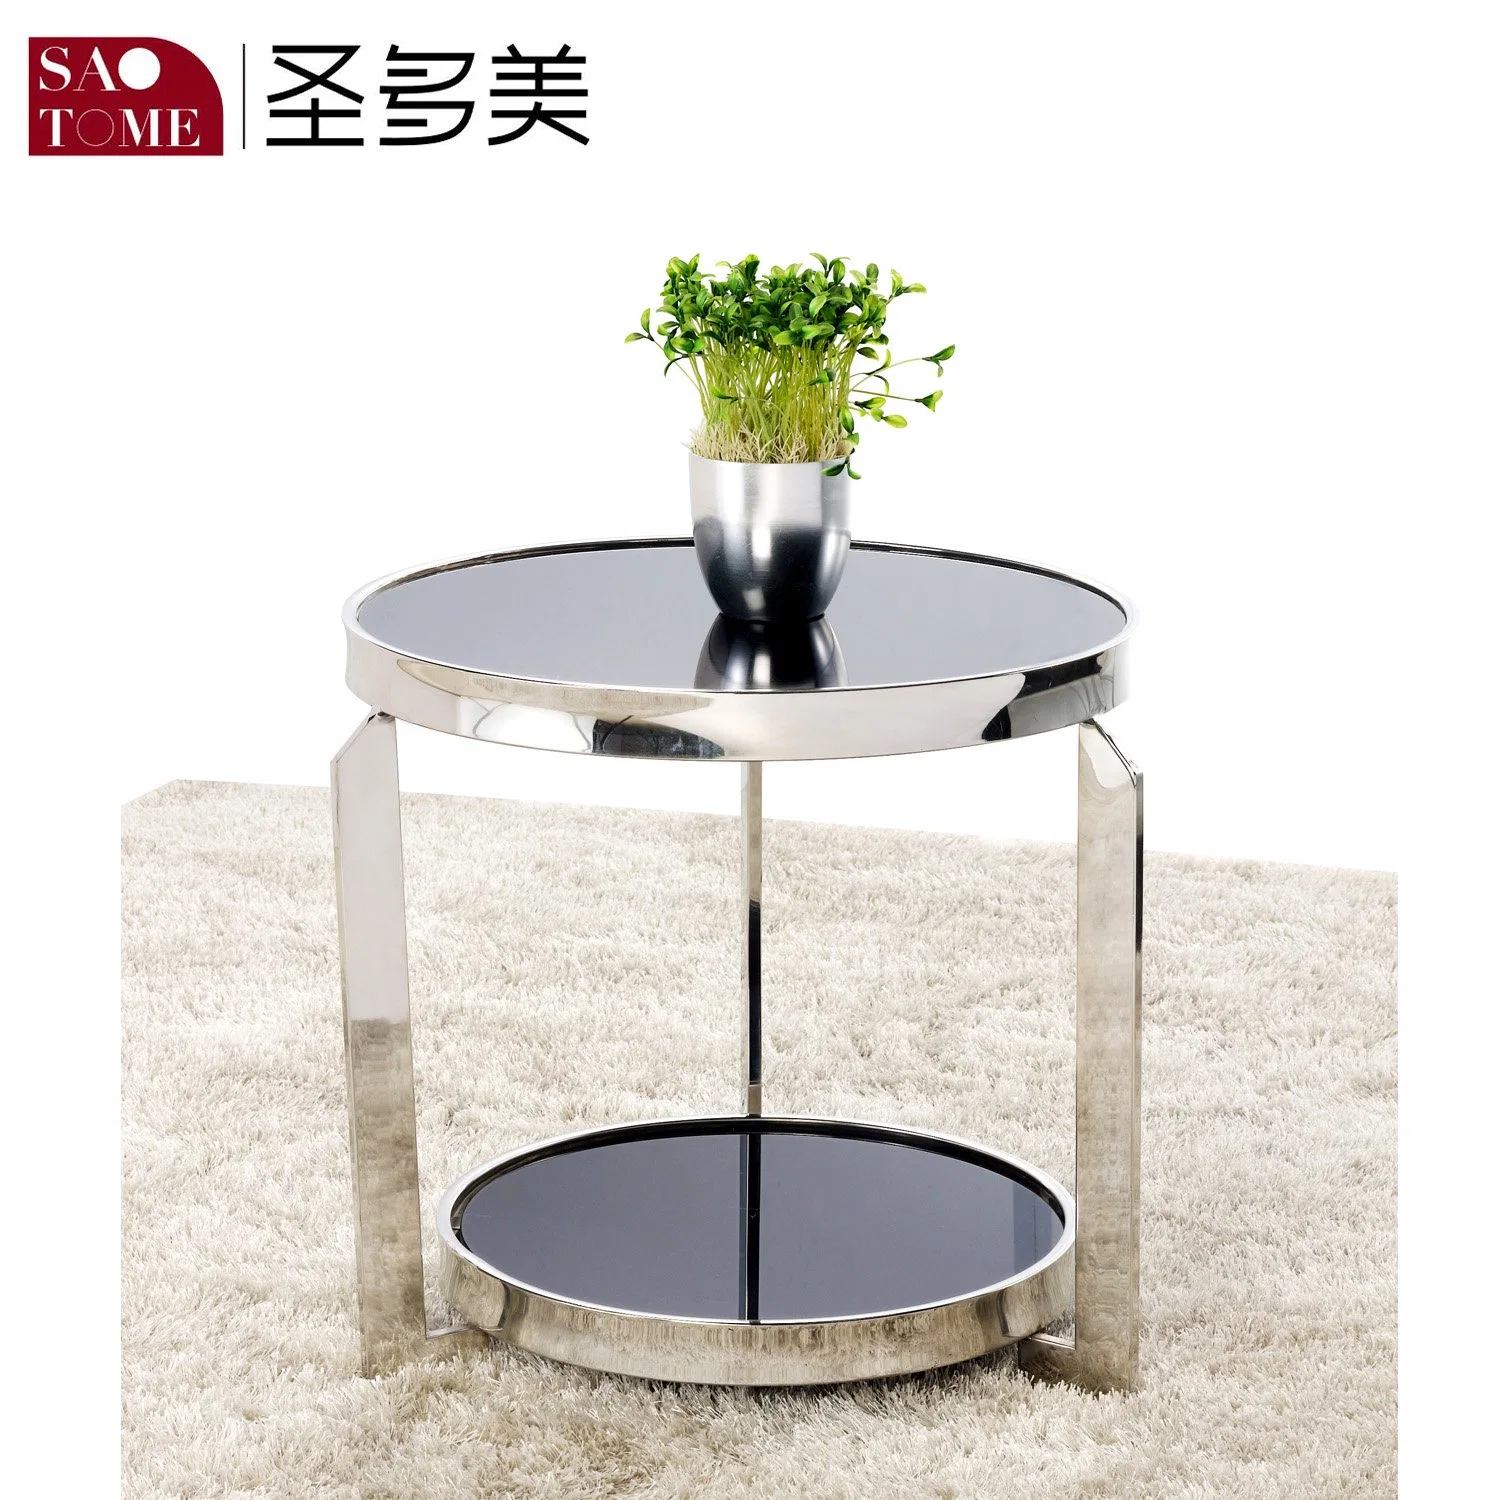 Minimalist Round End Table Coffee Table Living Room Furniture Sofa Side Table